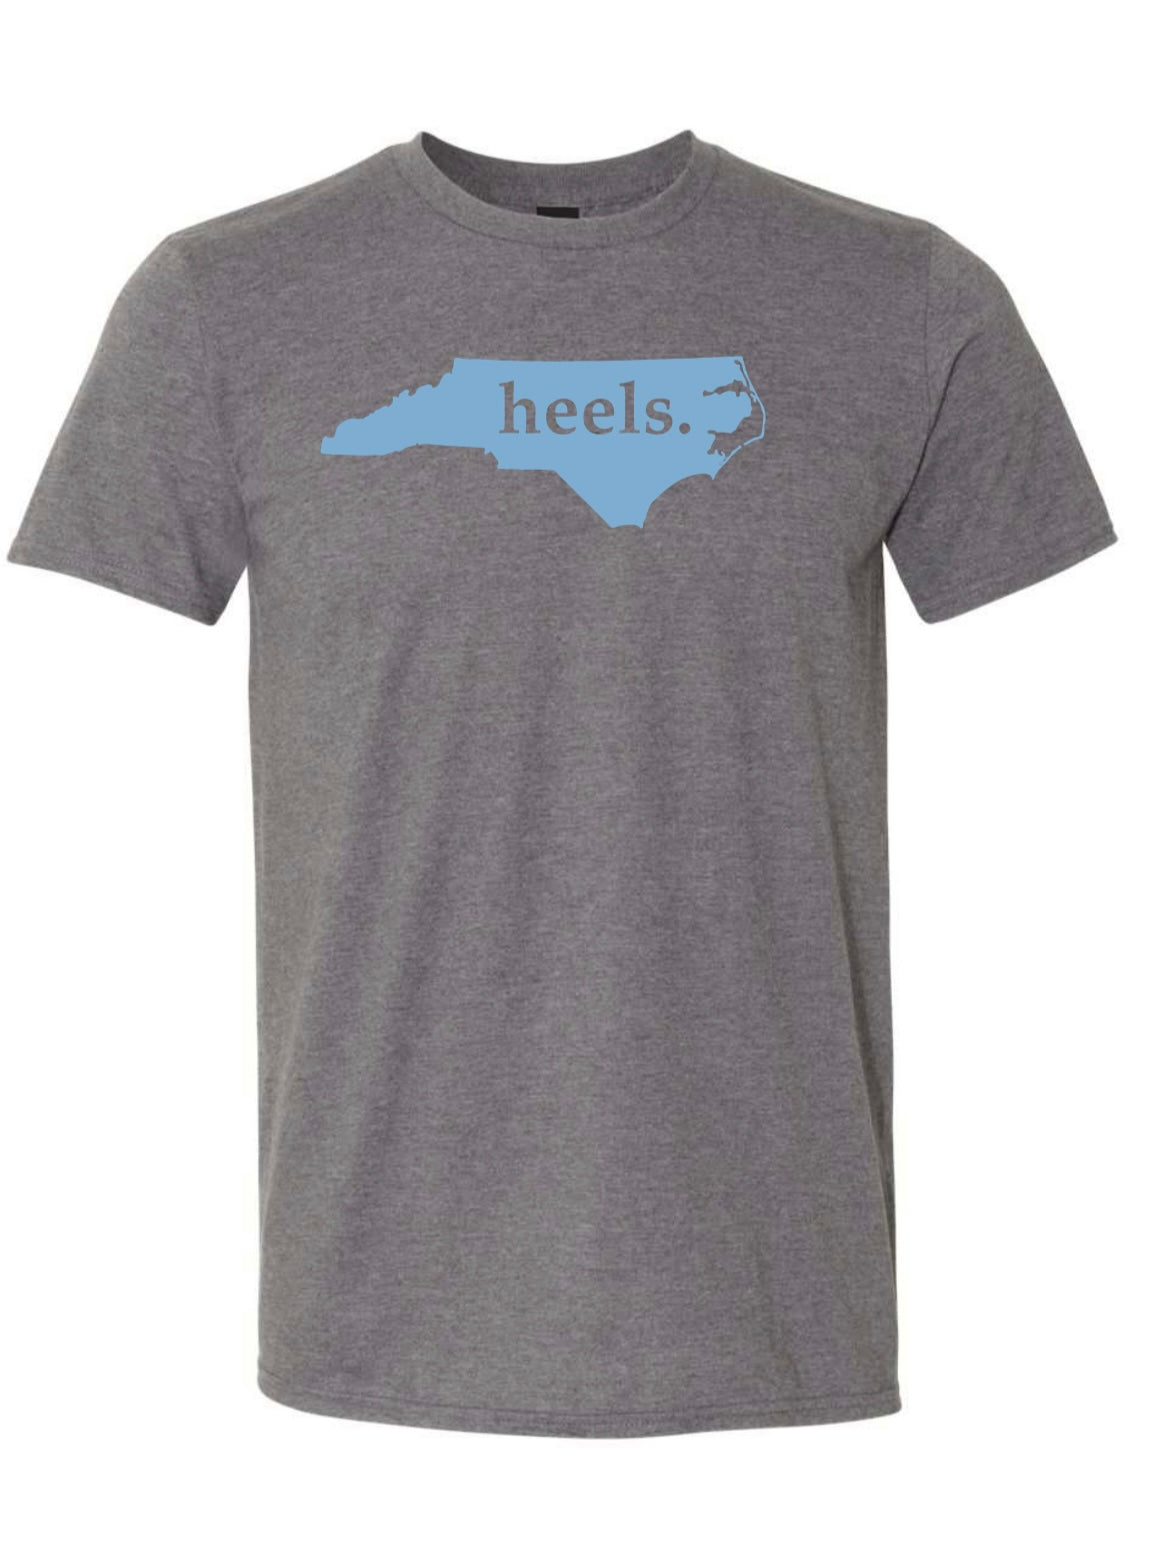 North Carolina State Heels Silhouette T-Shirt